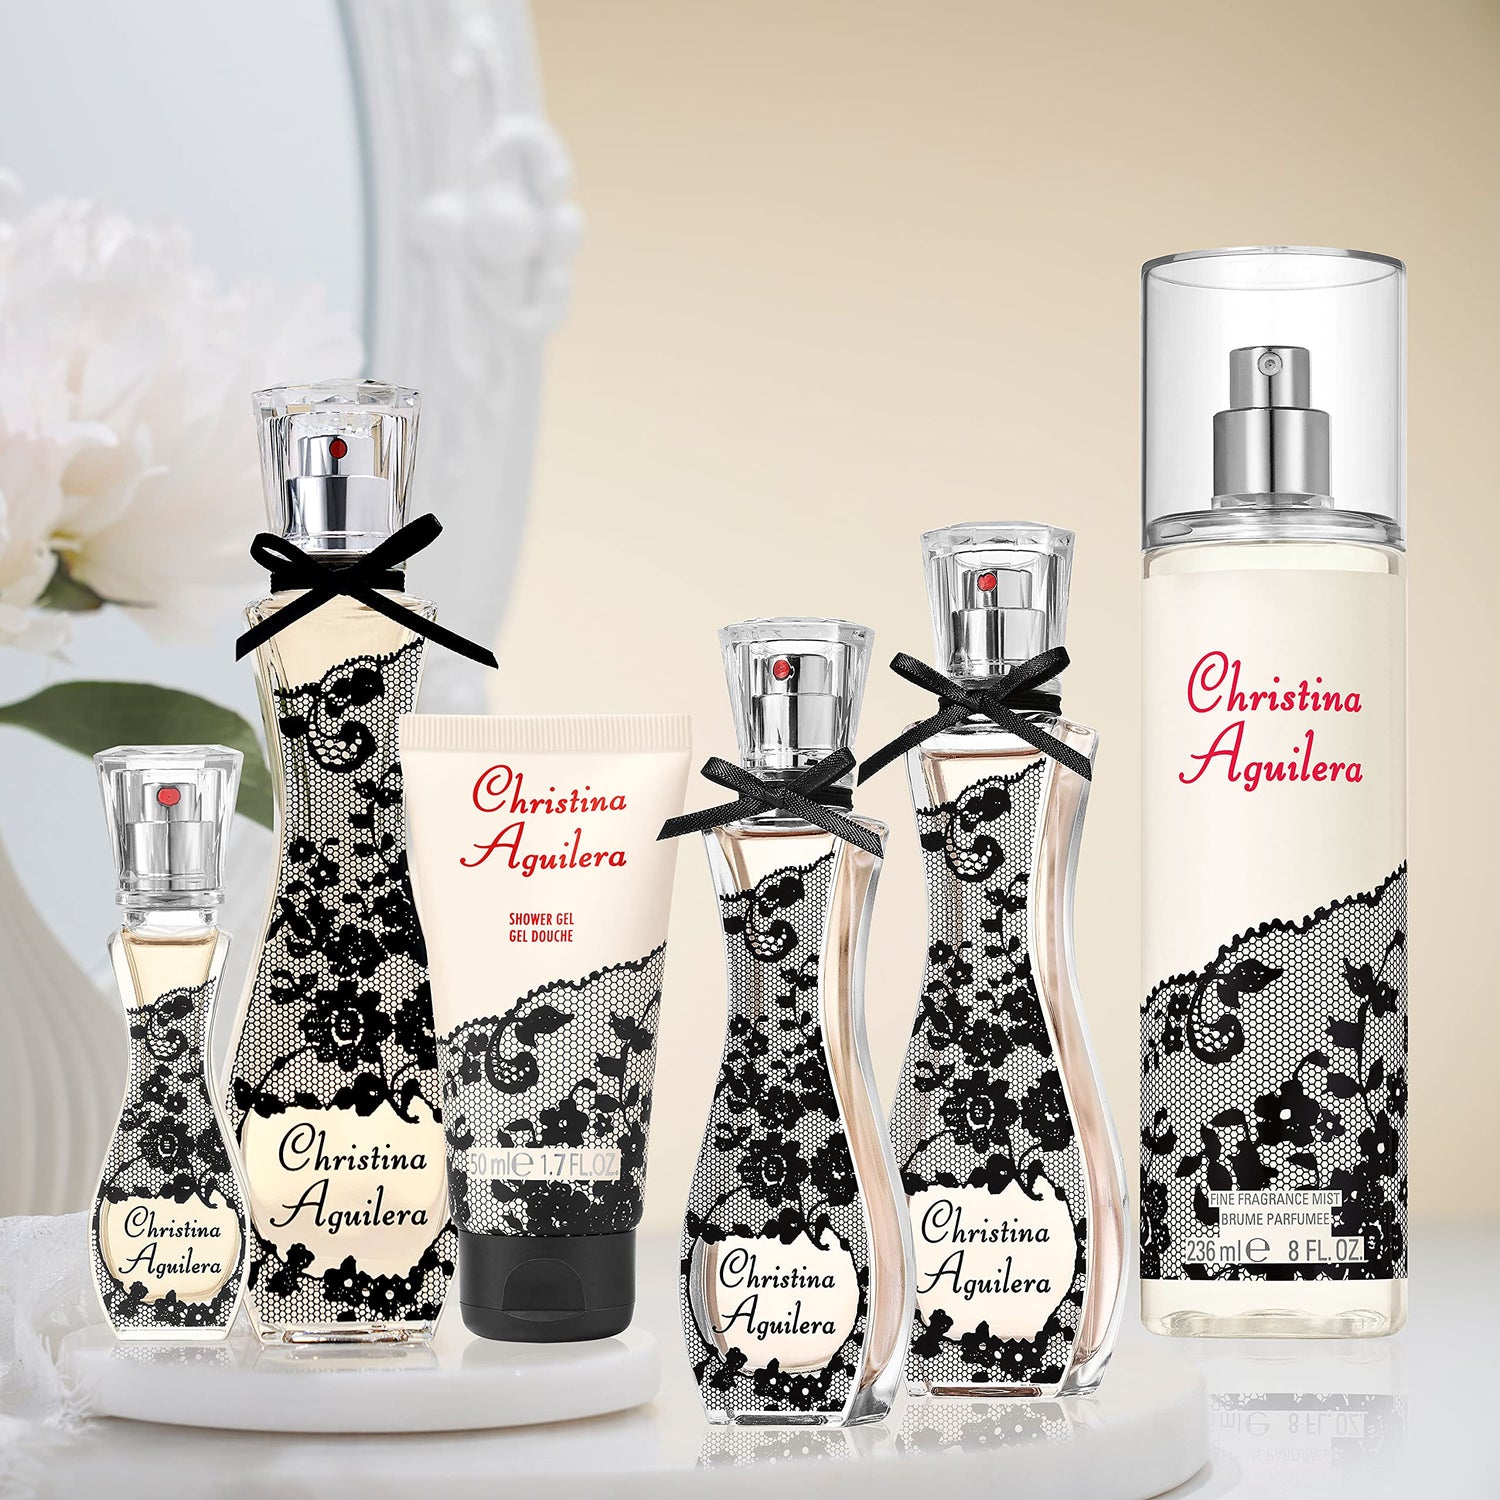 Christina Aguilera Perfume / fragrance collection